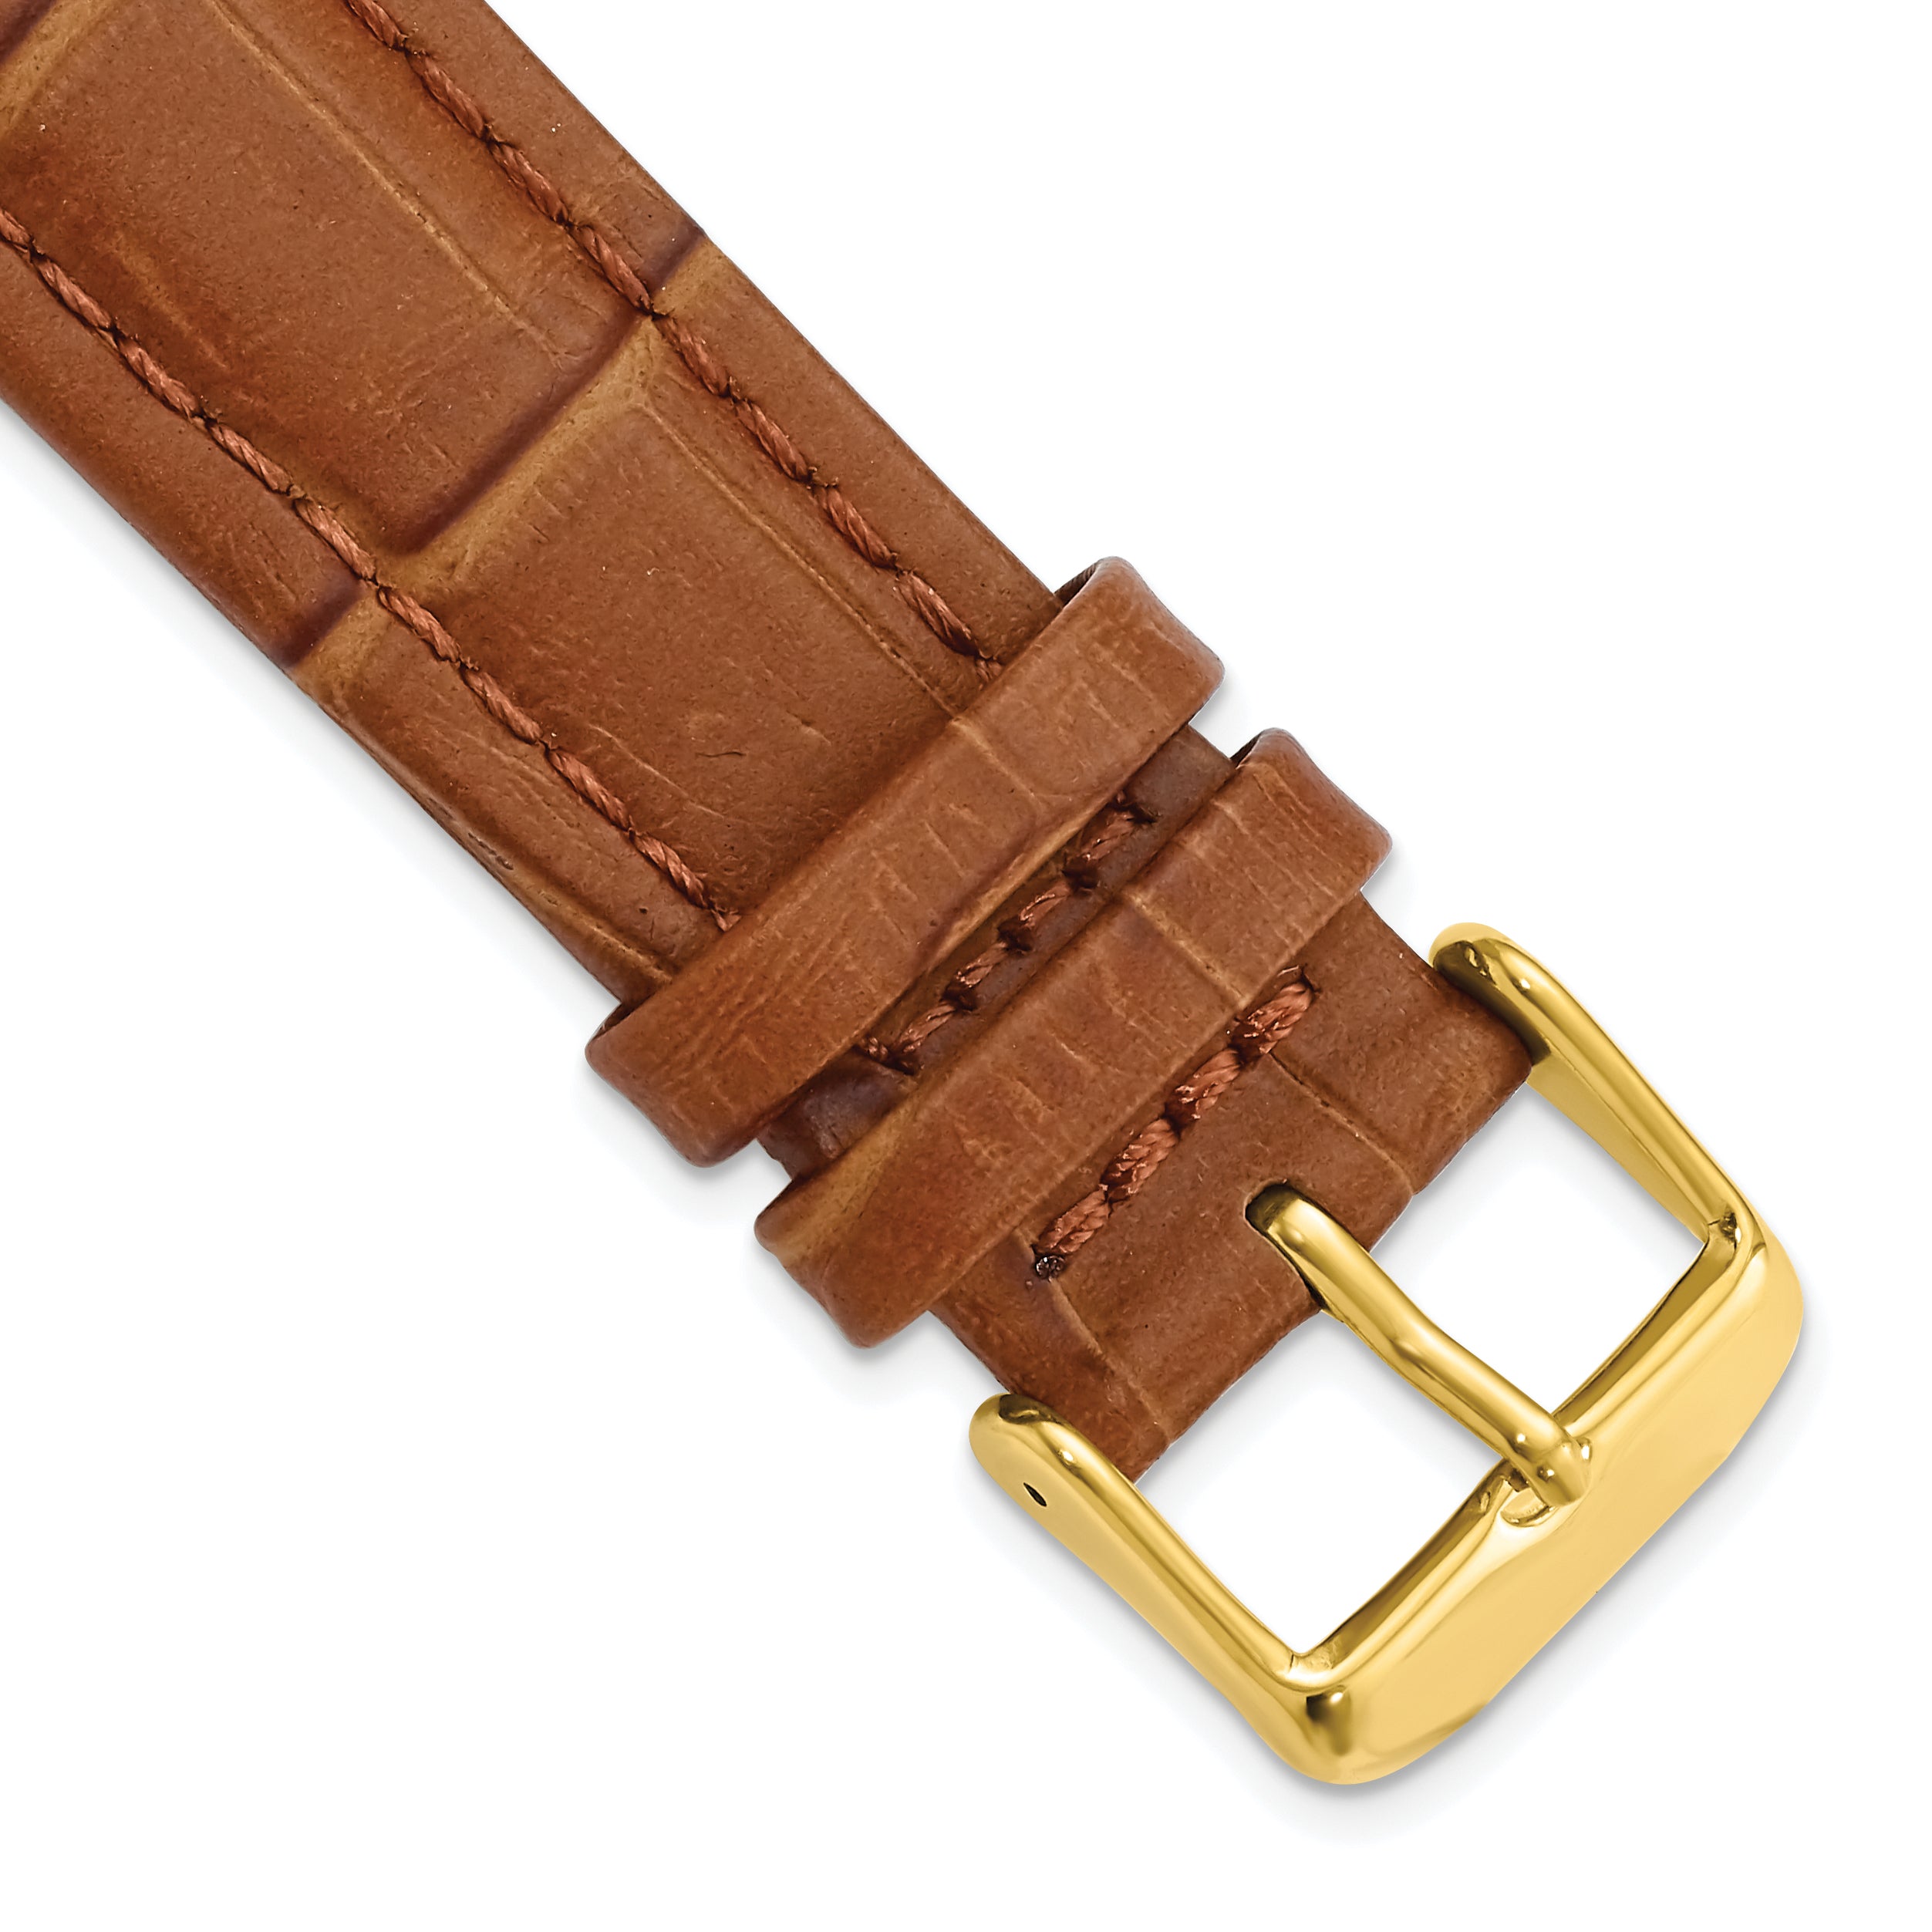 DeBeer 20mm Havana Matte Alligator Grain Leather with Gold-tone Buckle 7.5 inch Watch Band